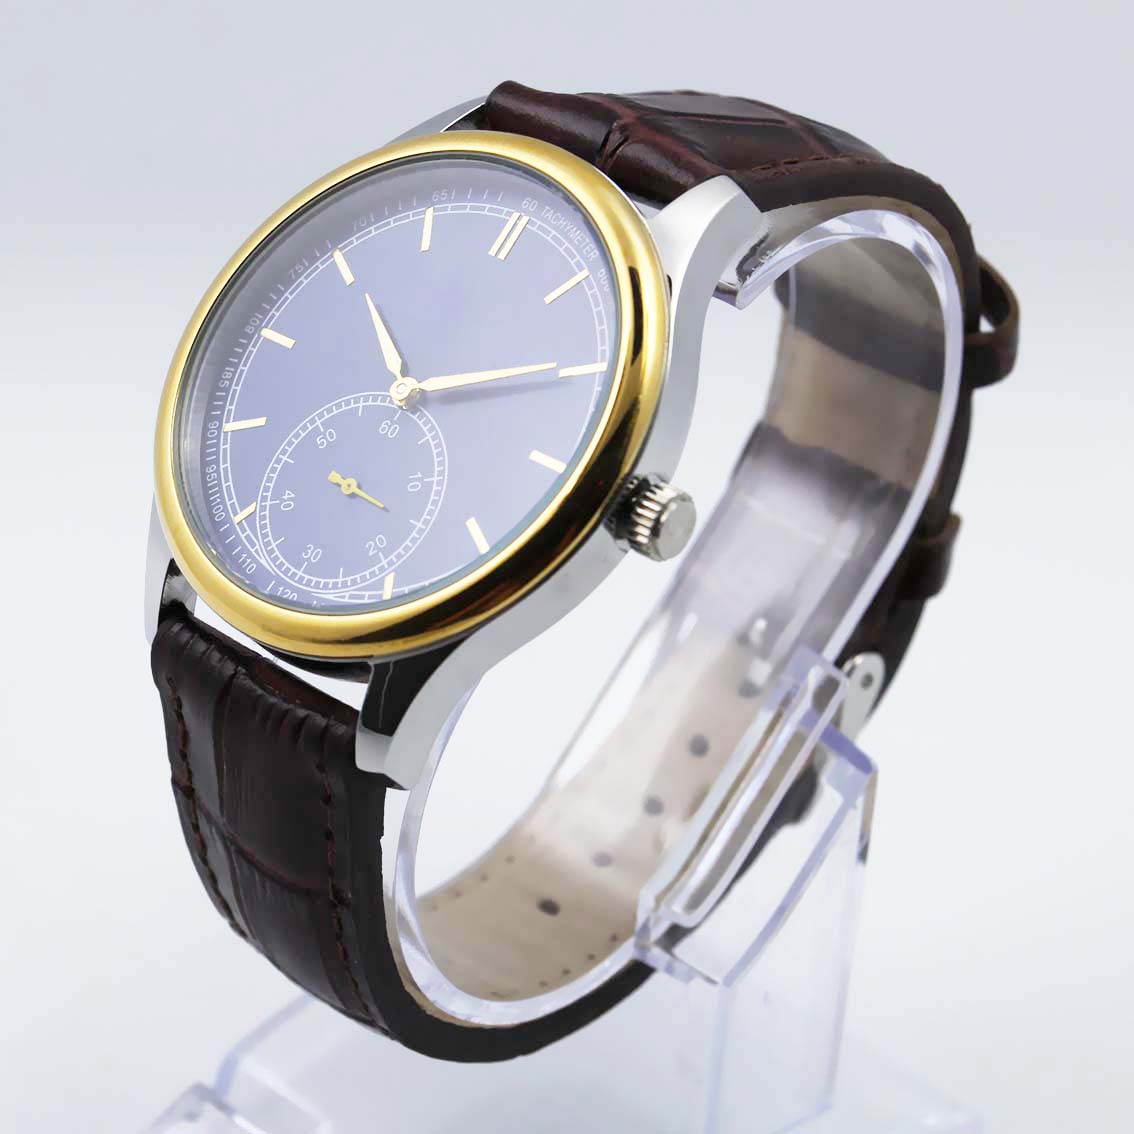 #02079Men's wristwatch quartz analog leather strap watch